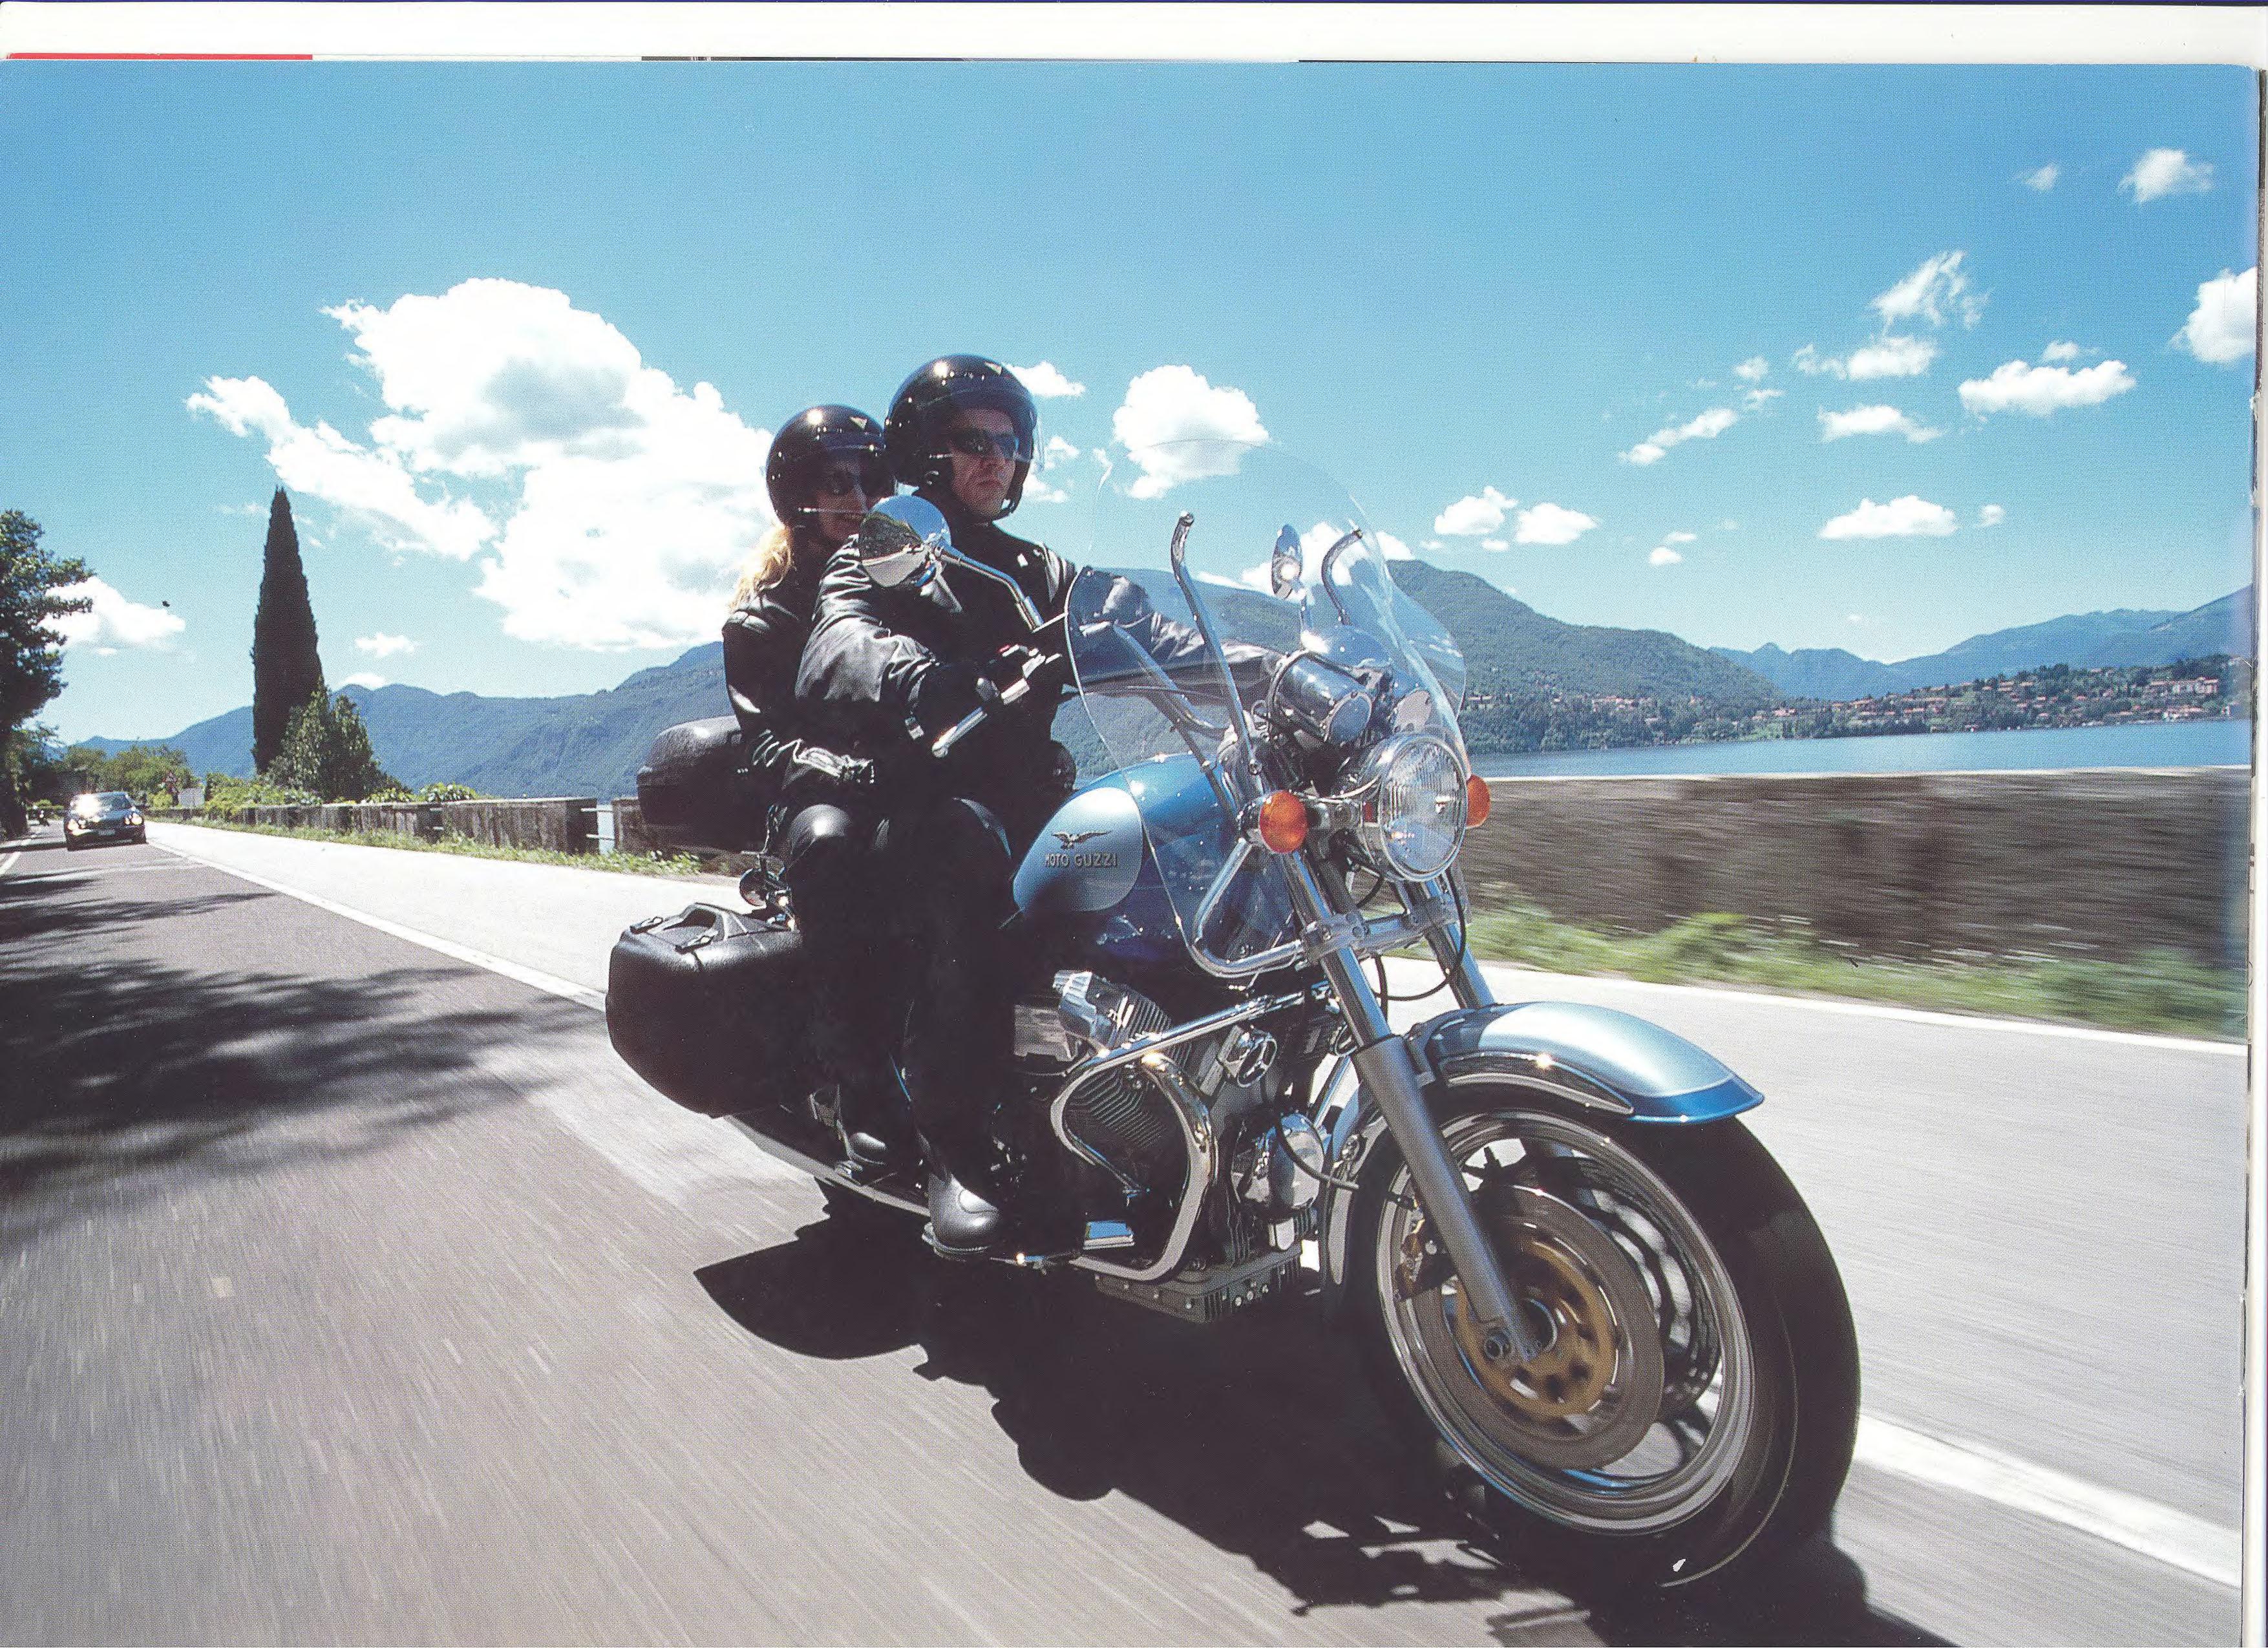 Moto Guzzi factory brochure: California EV